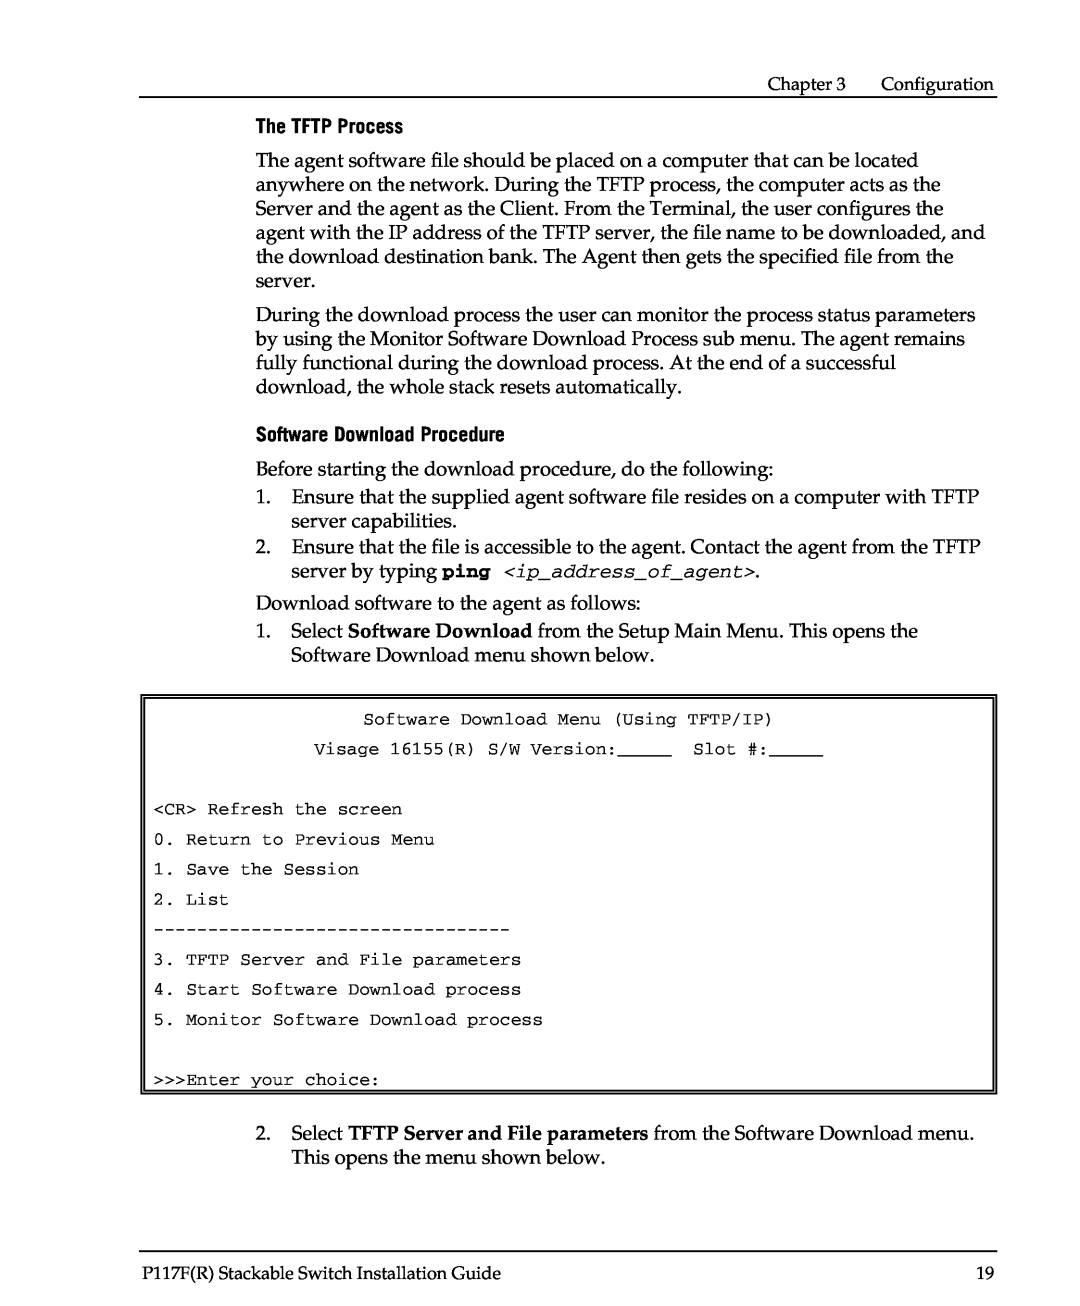 Avaya P117F(R) manual The TFTP Process, Software Download Procedure 